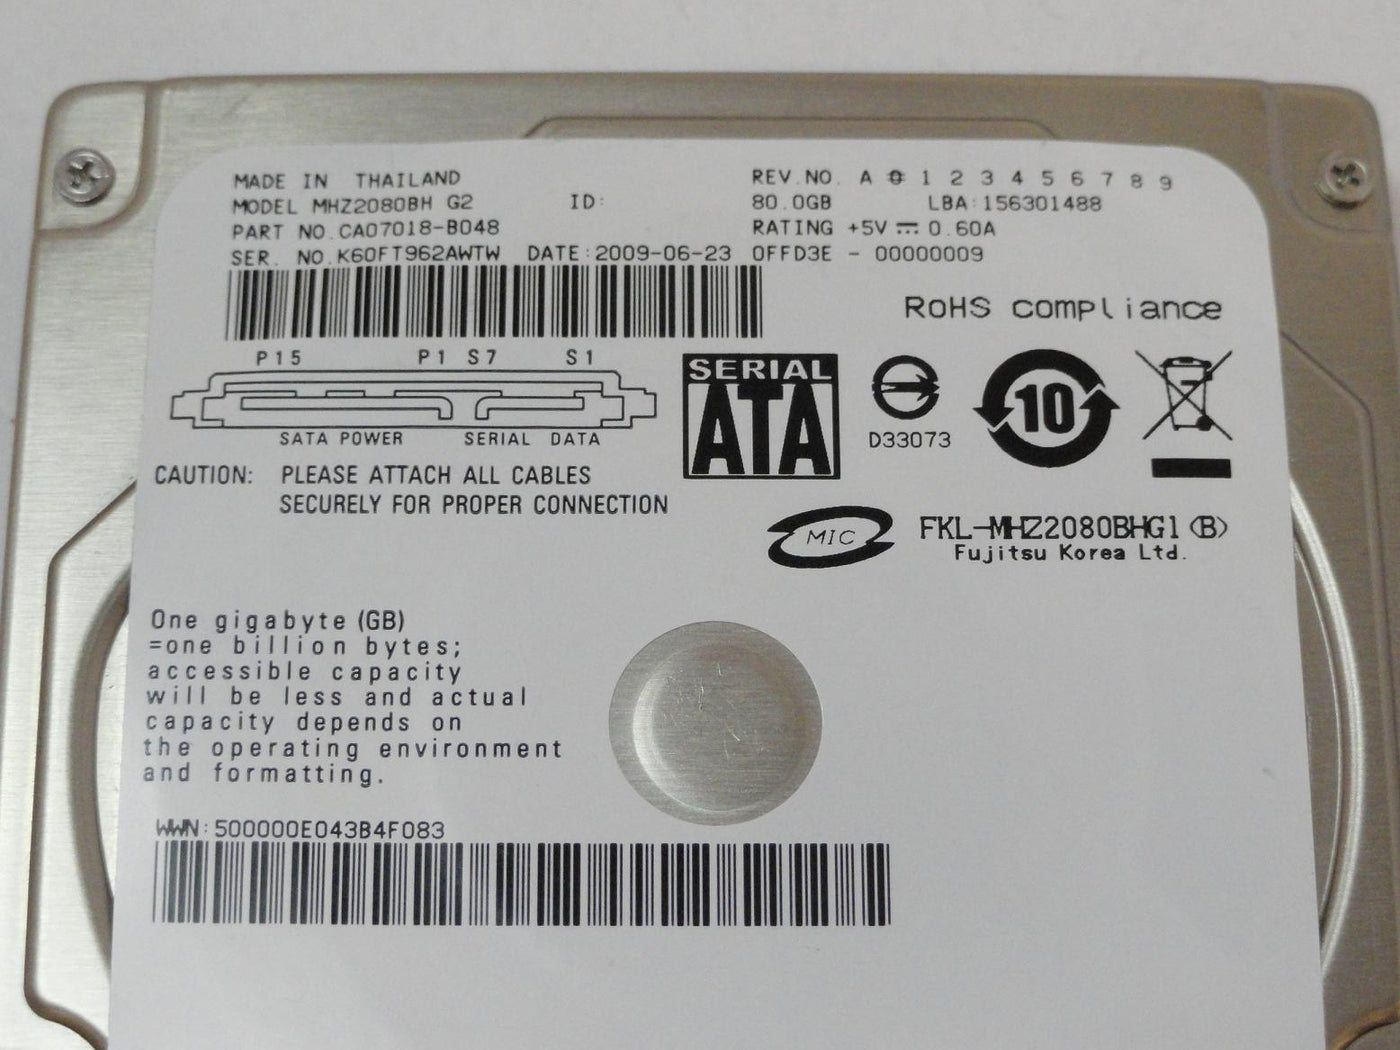 PR15789_CA07018-B048_Fujitsu 80GB SATA 5400rpm 2.5in HDD - Image3